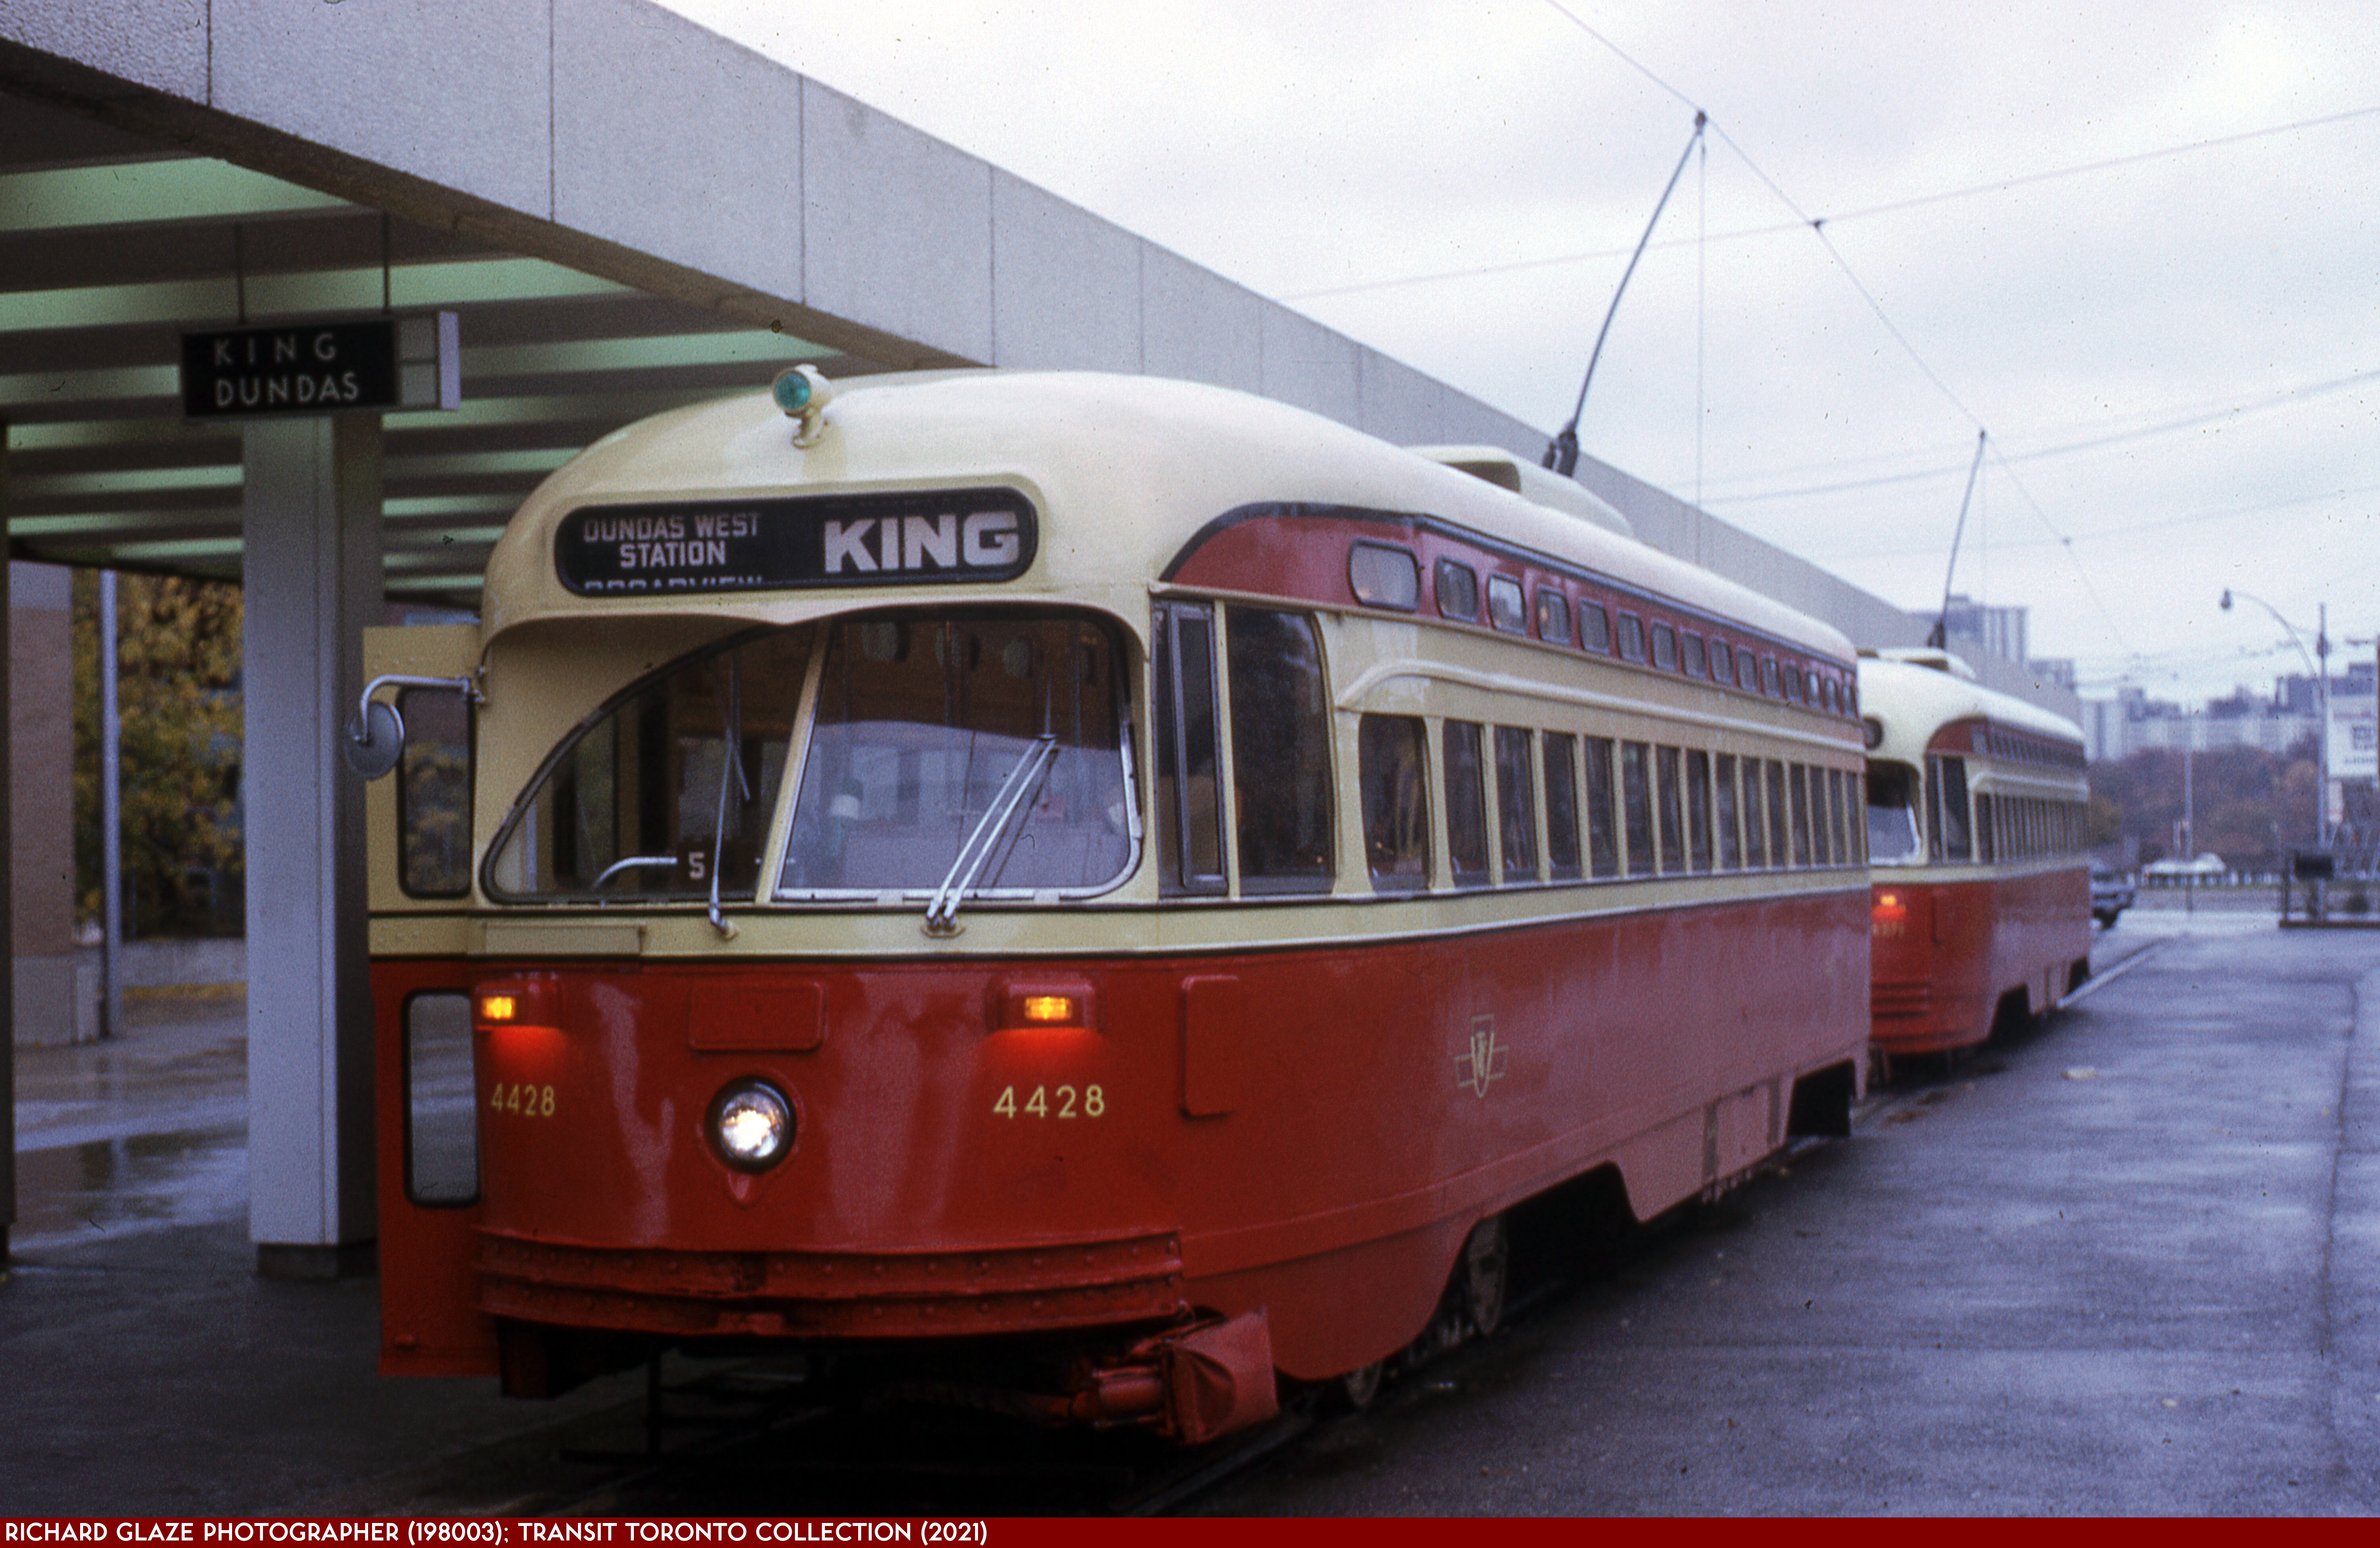 19800300 - 504 King - 4428 Dundas West Station